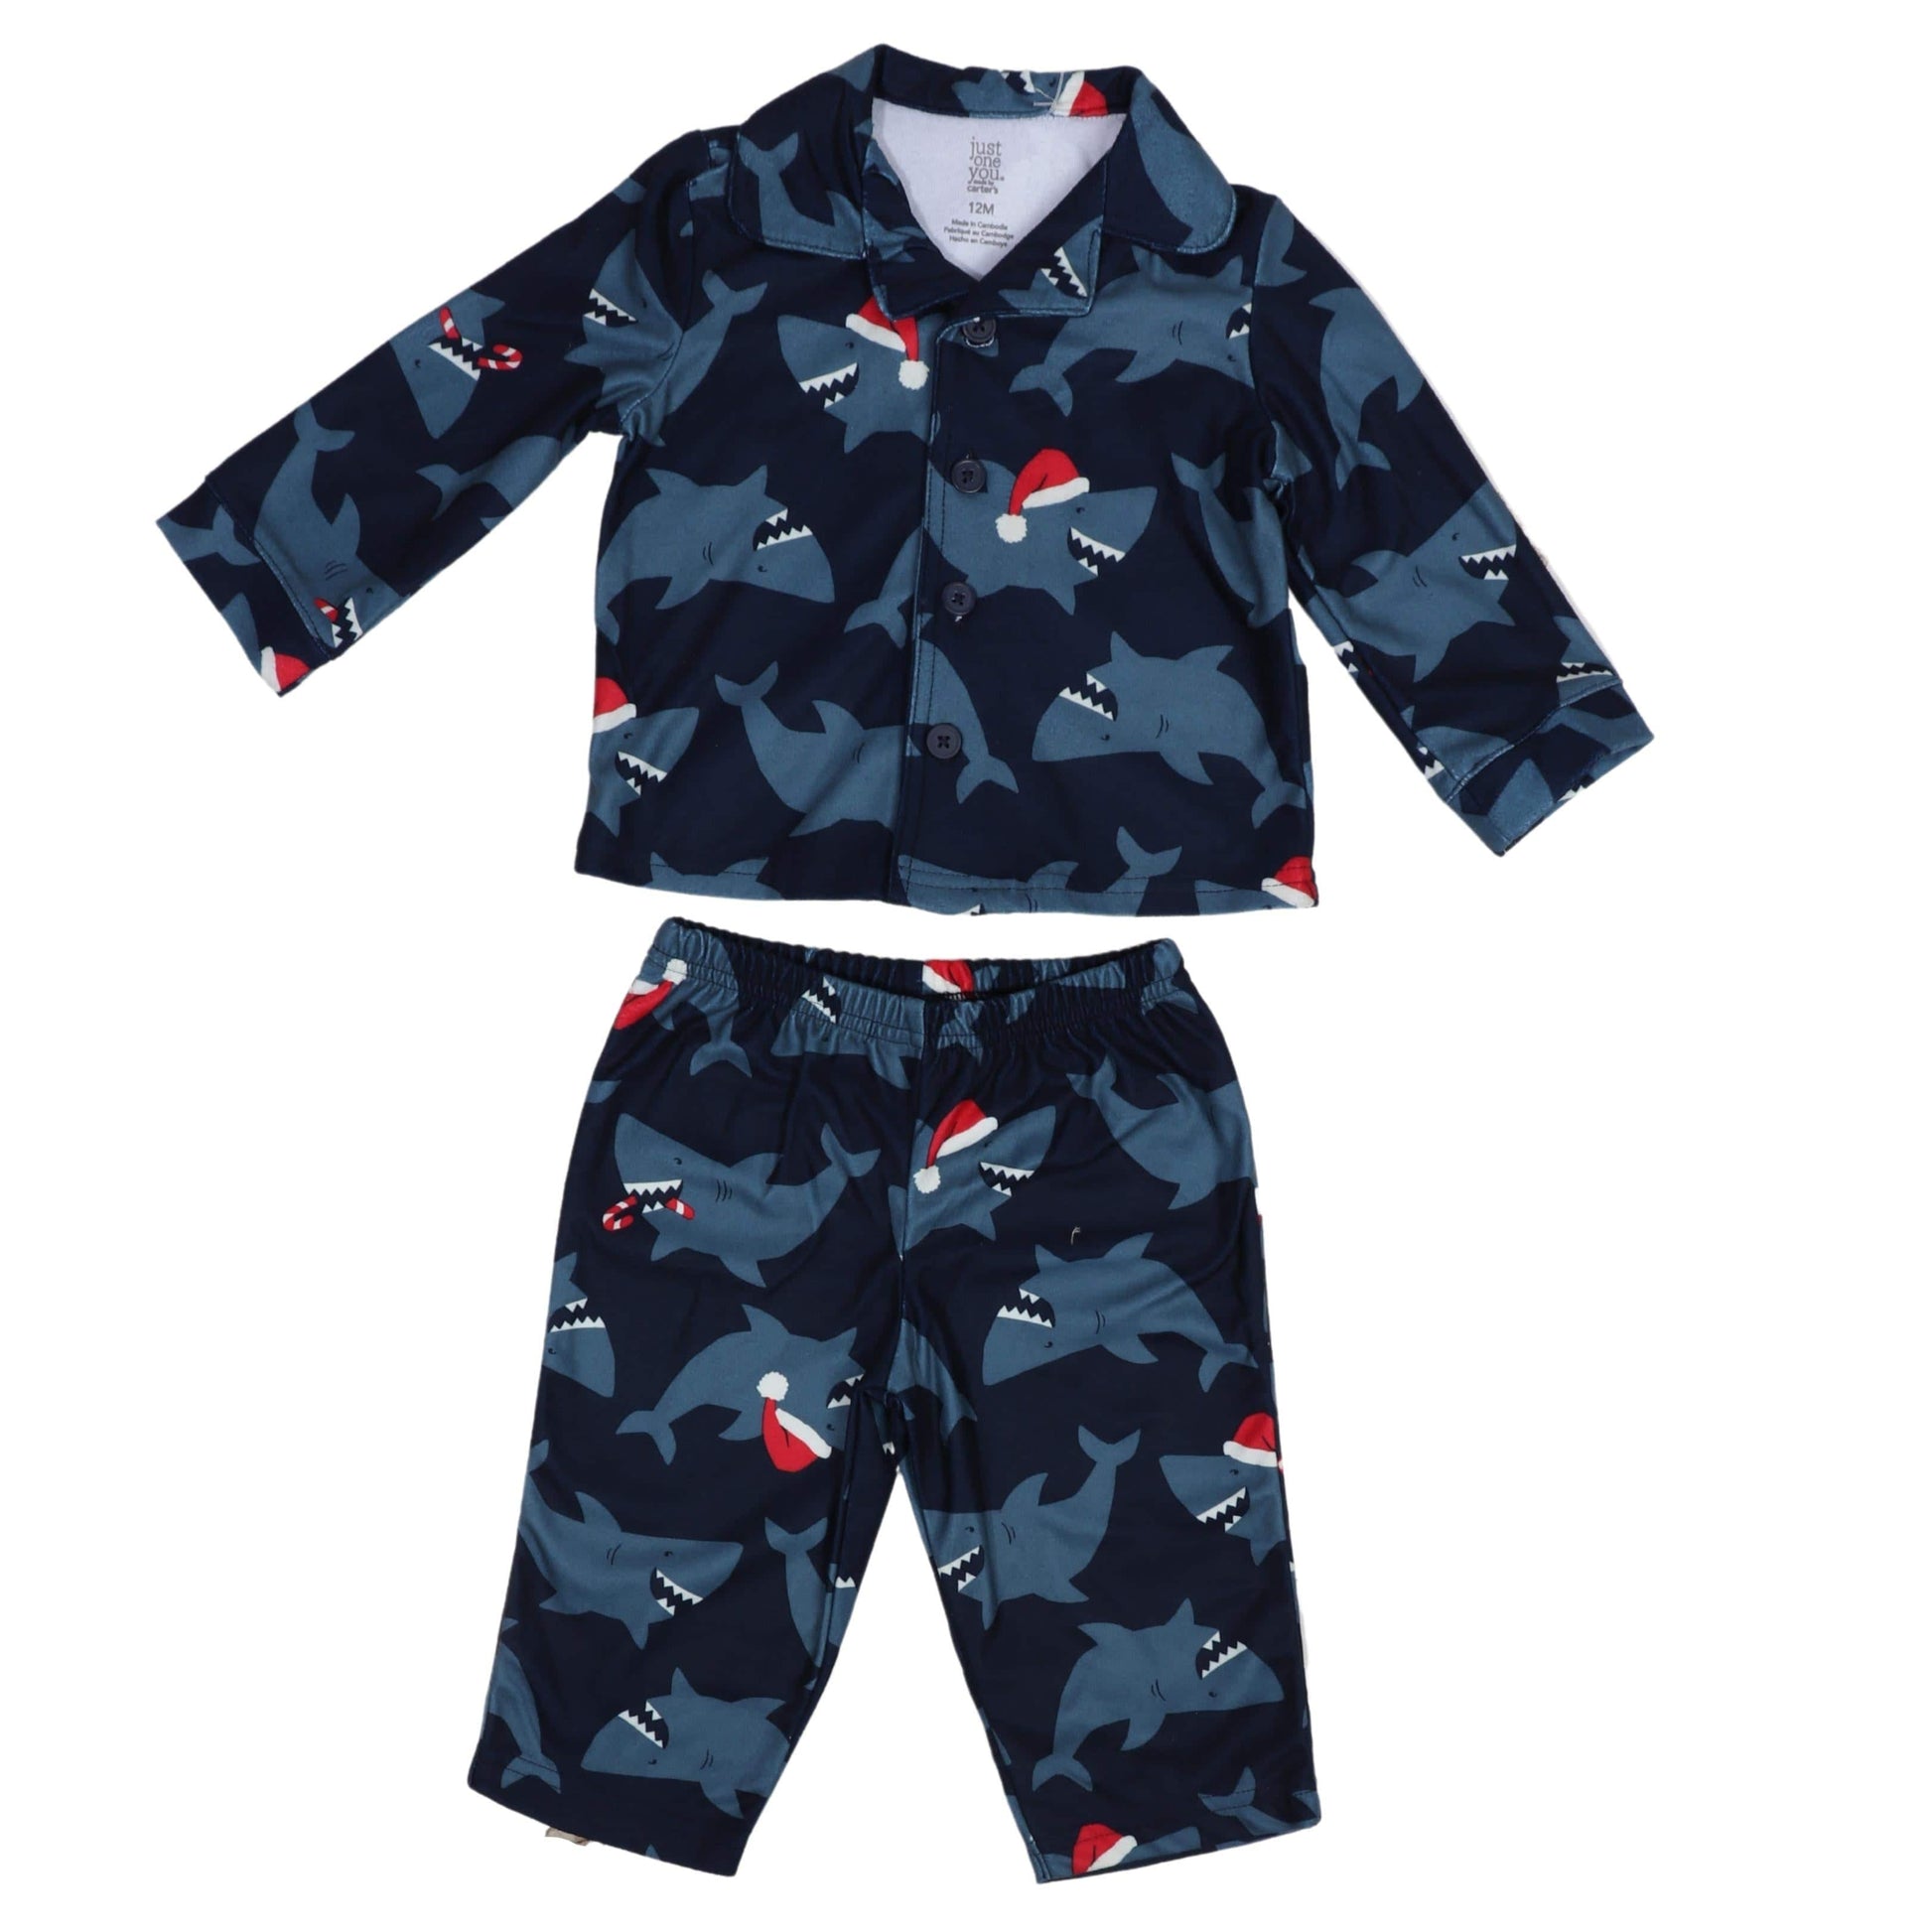 CARTER'S Baby Boy 12 Month / Navy CARTER'S - Printed Pajama Set